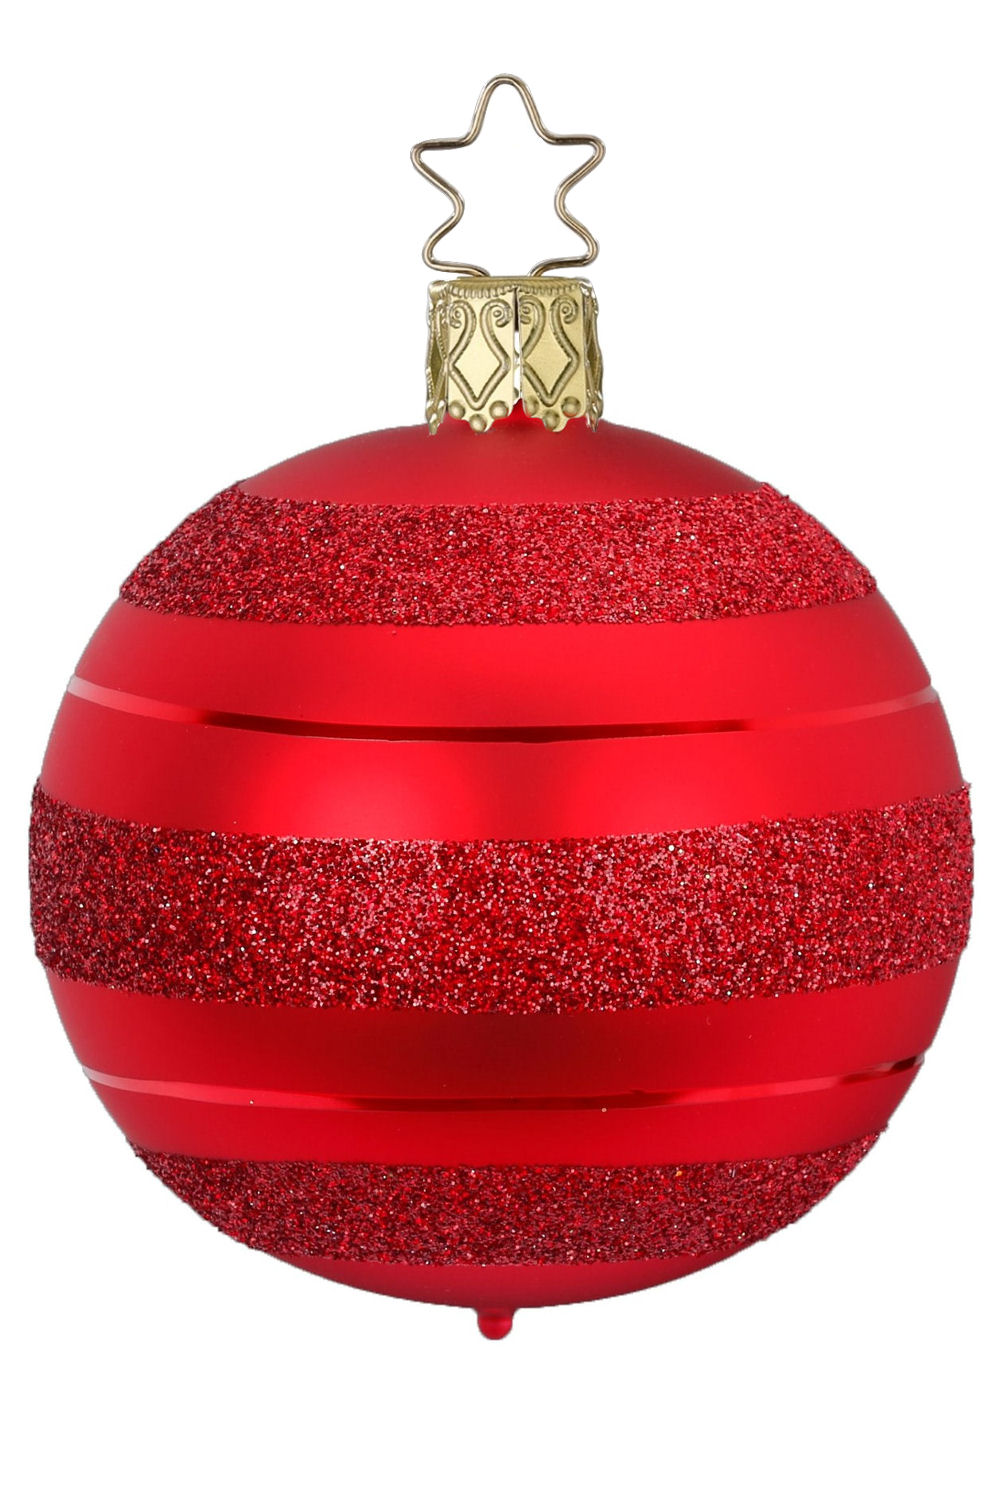 Inge-glas 8cm Ball Rising Star Toffee matt 21193T008 German Glass Christmas Orna 